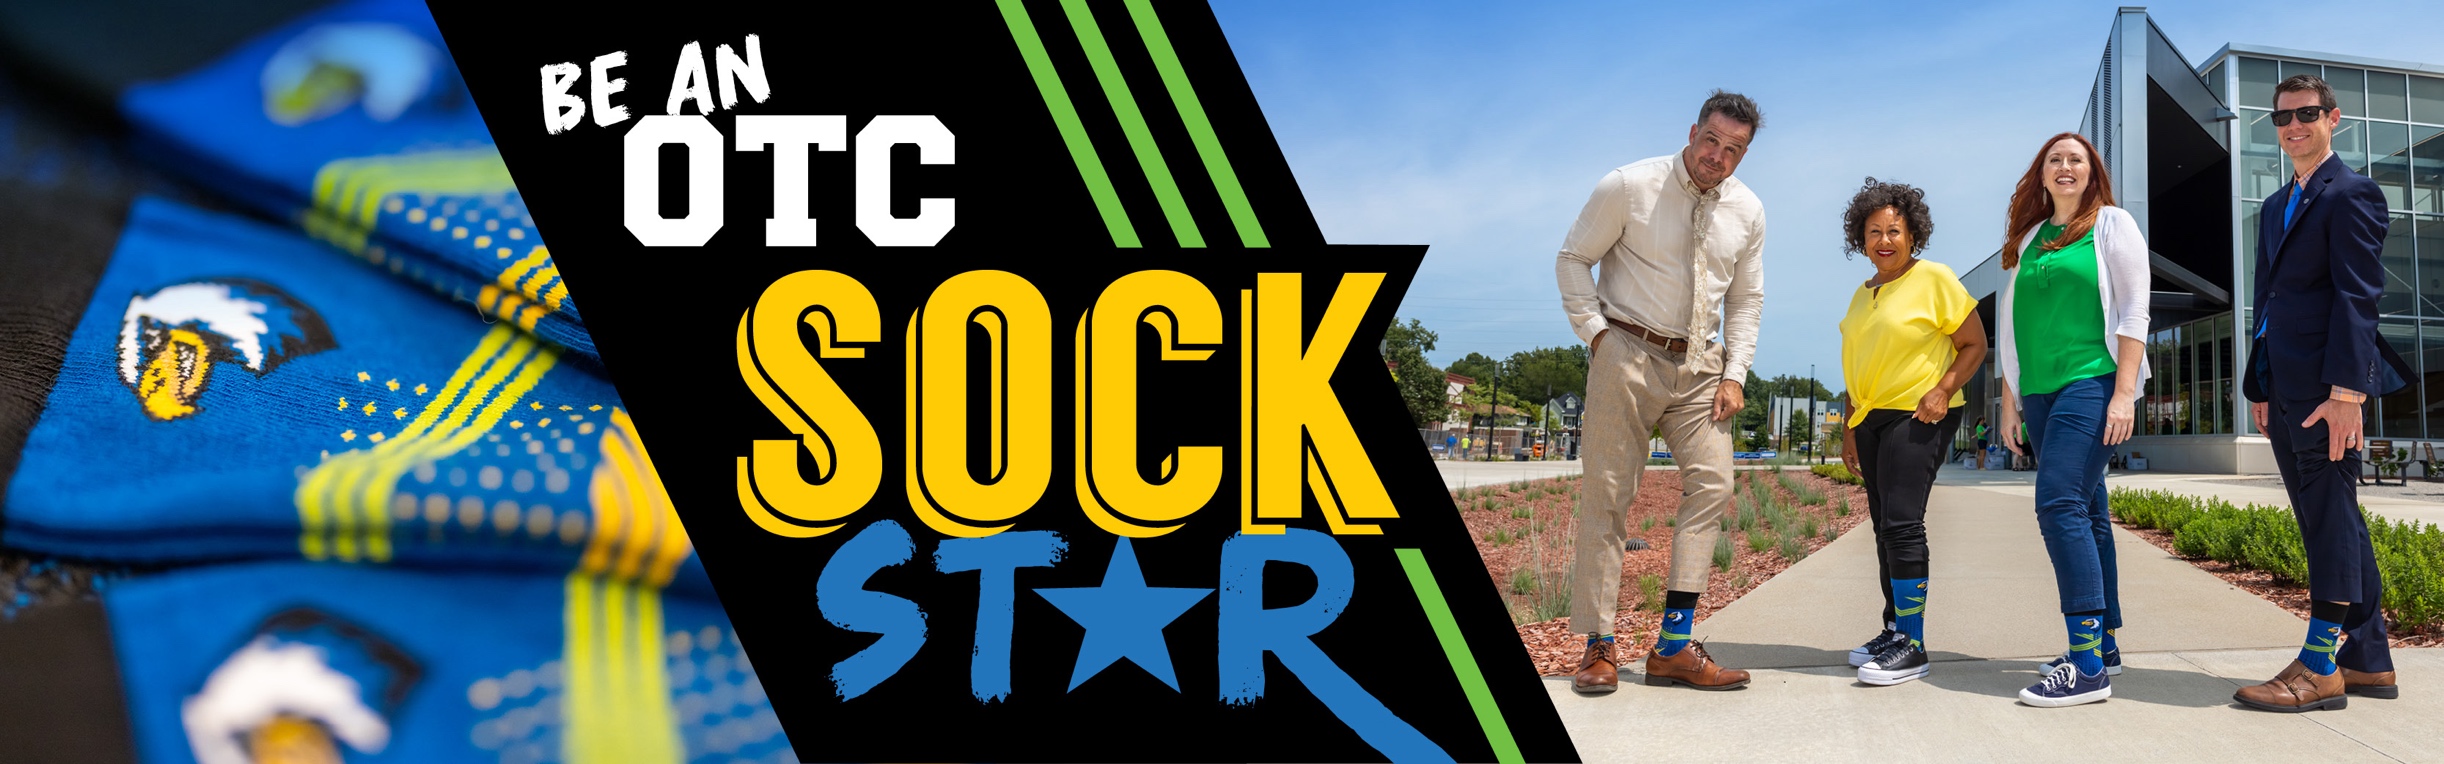 Be an OTC Sock Star